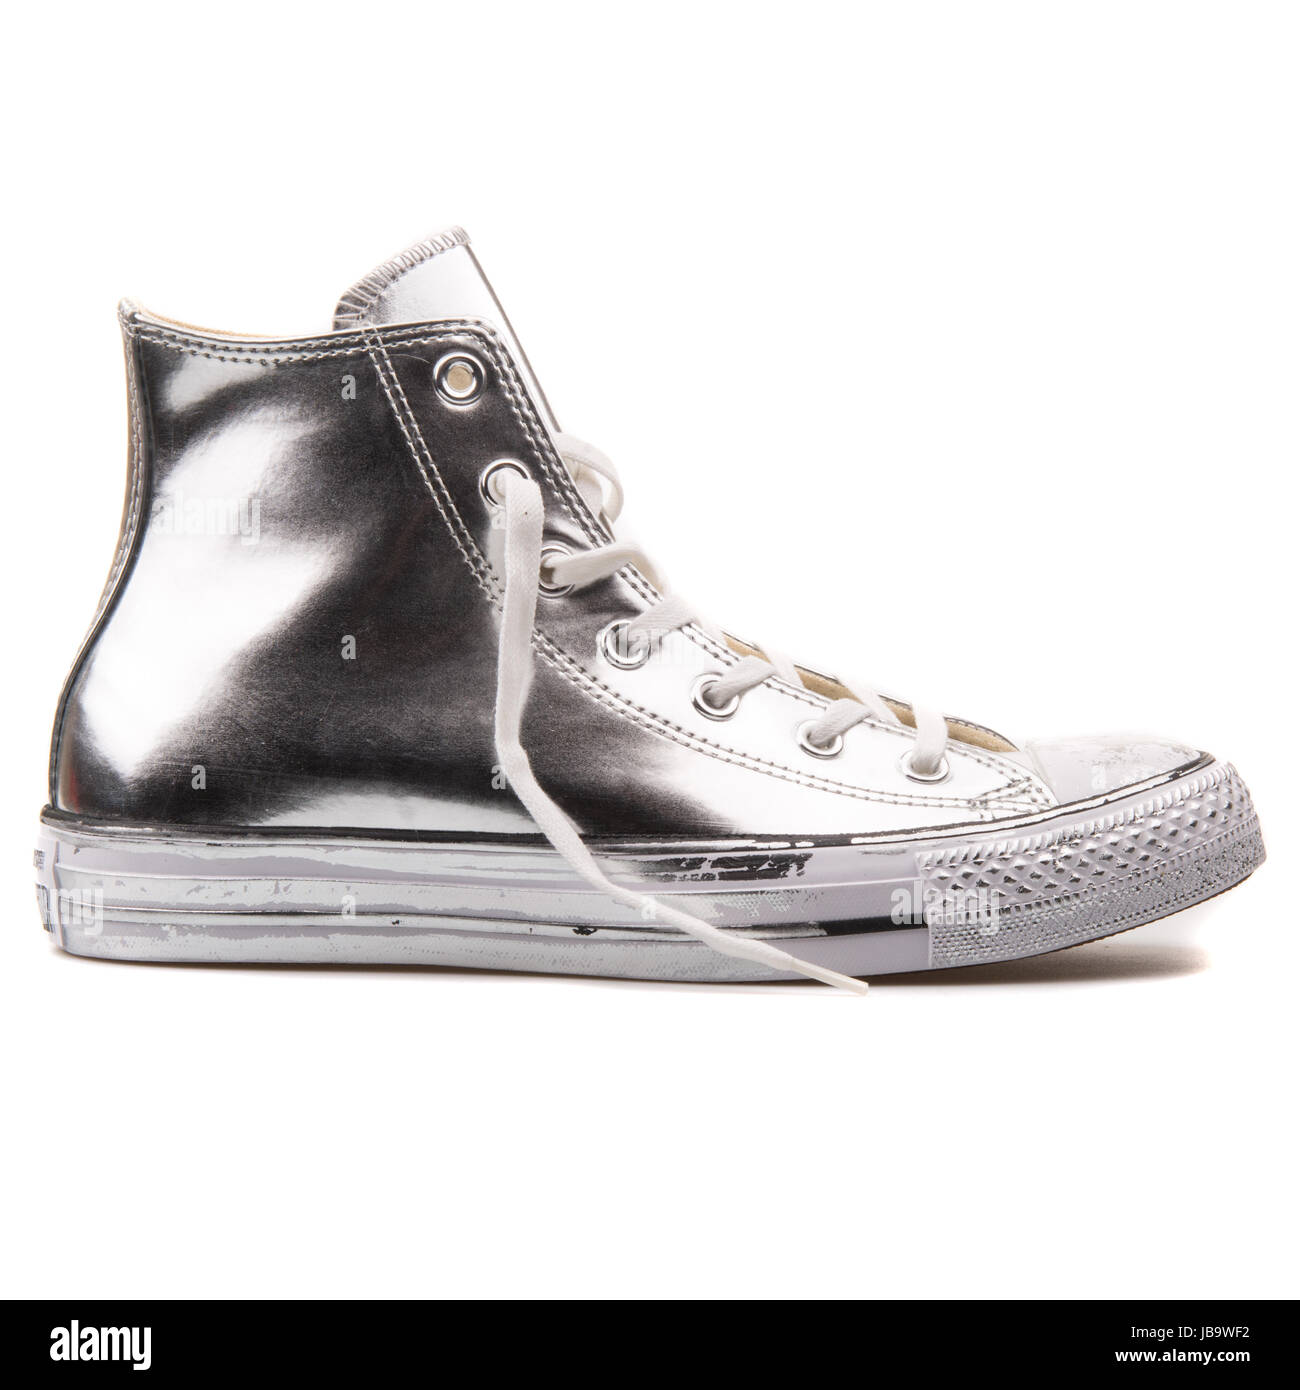 Converse Chuck Taylor All Star Chrome Hi Silver White Women's Shoes -  549628C Stock Photo - Alamy